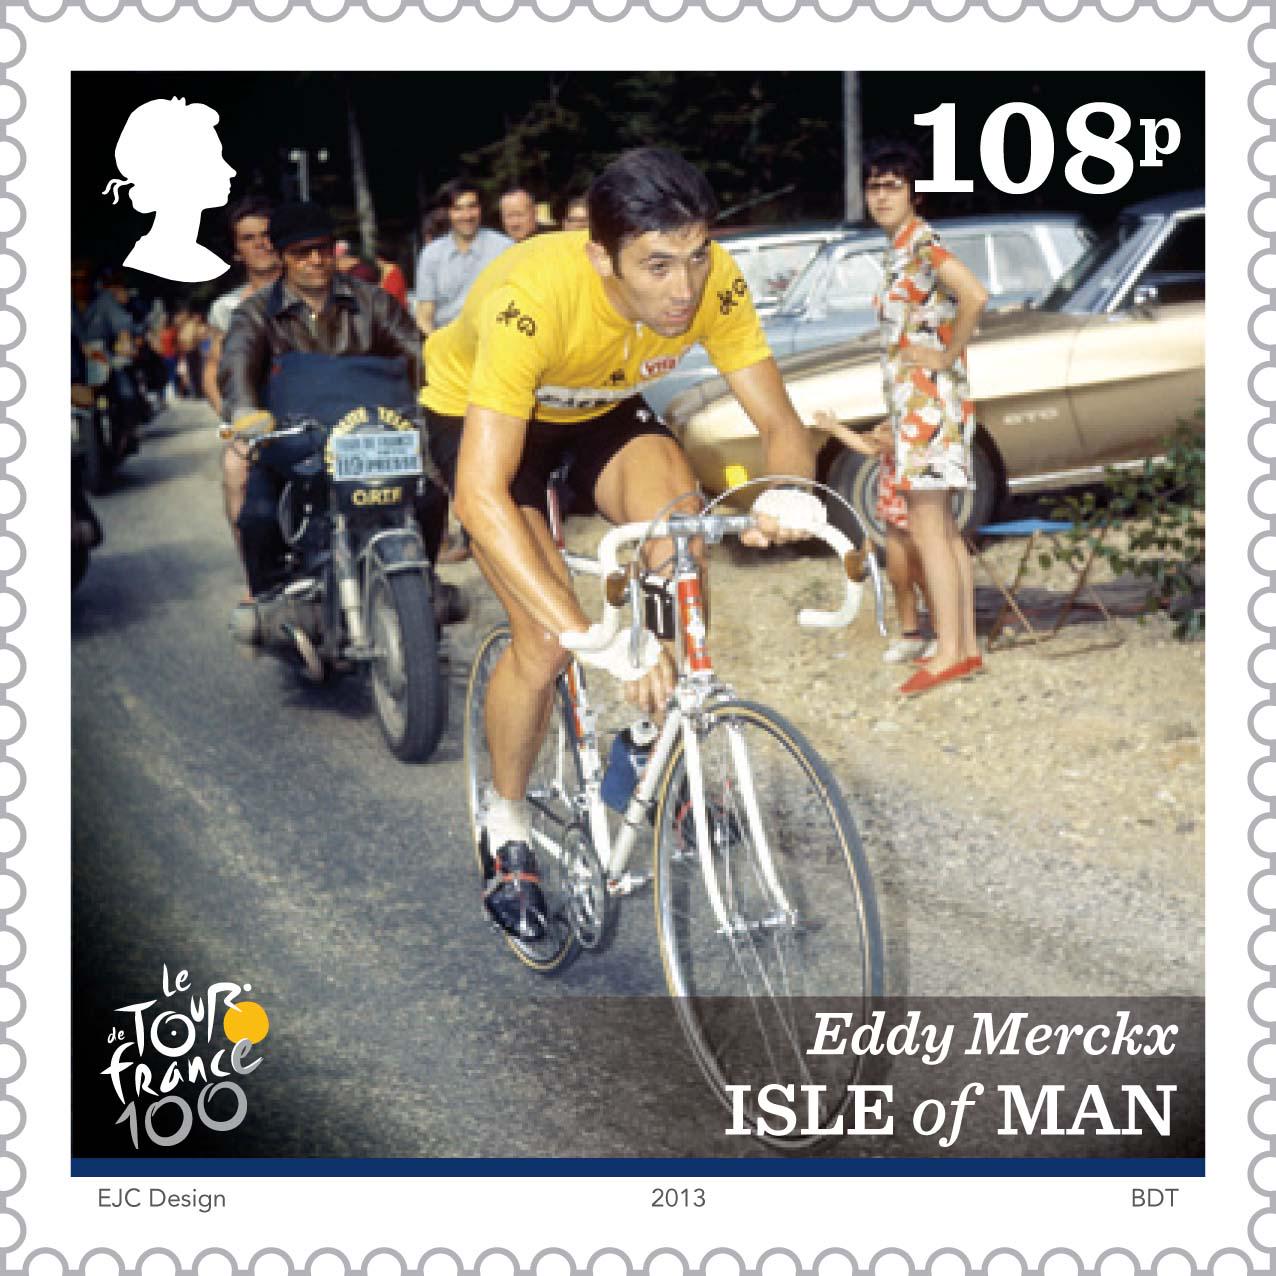 Happy 70th birthday to Eddy Merckx - 5 time winner of & 3 time world champion  